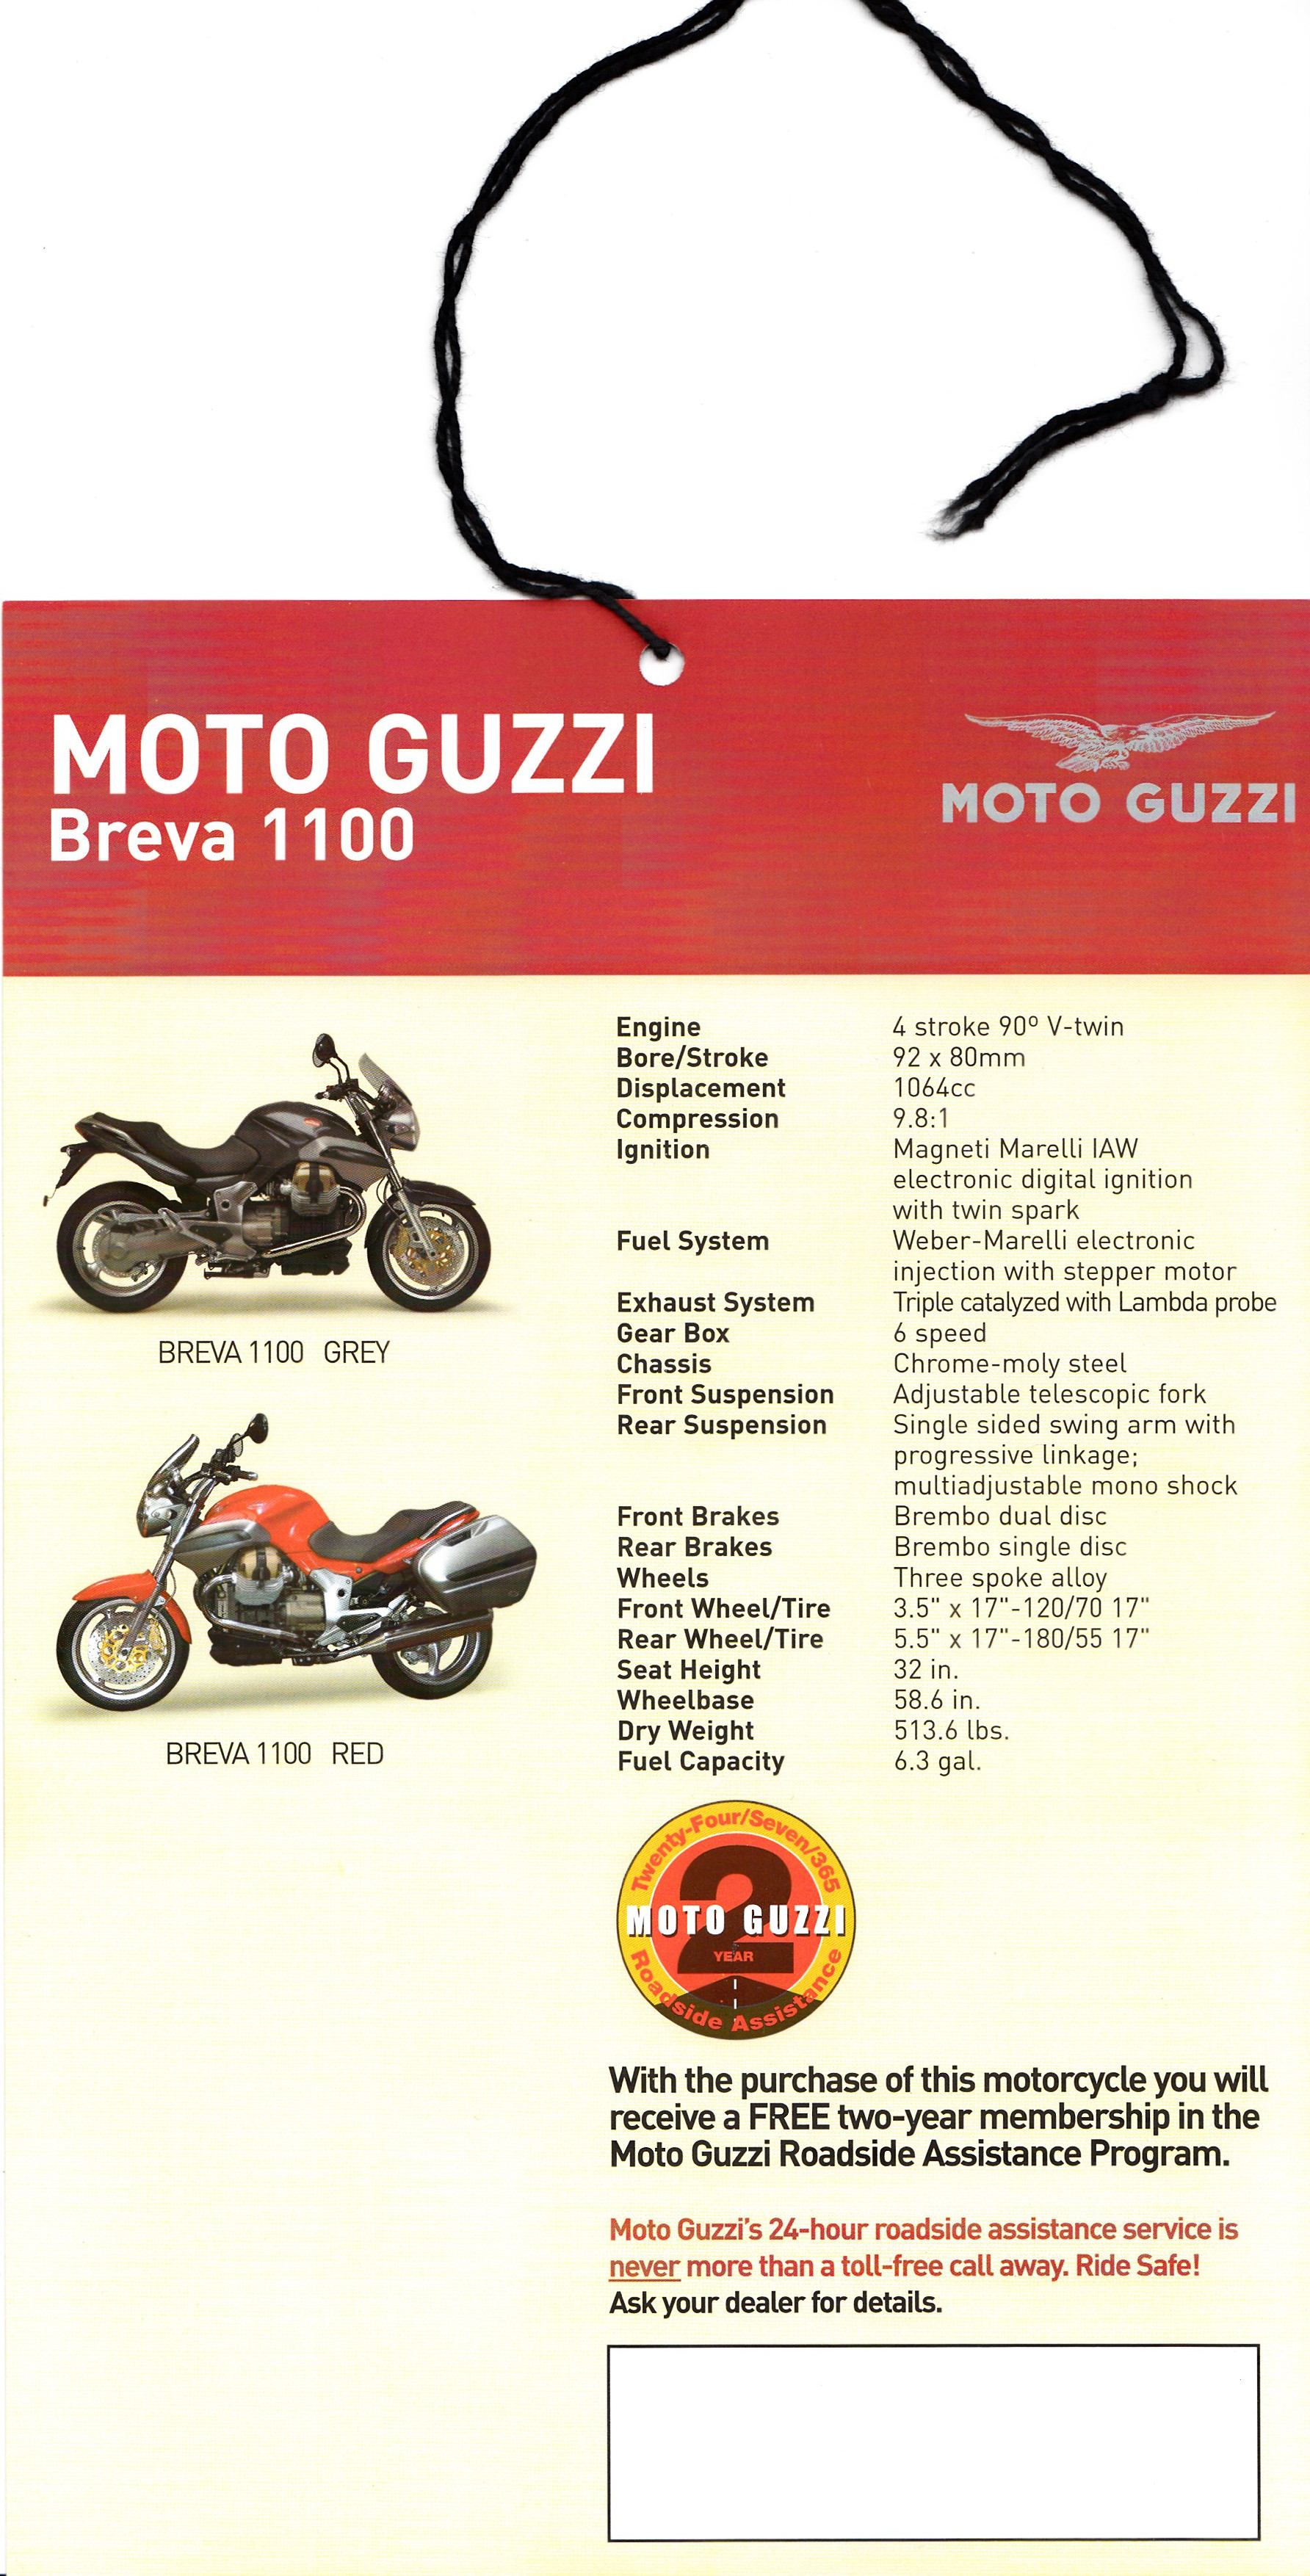 Tag - Moto Guzzi Breva 1100